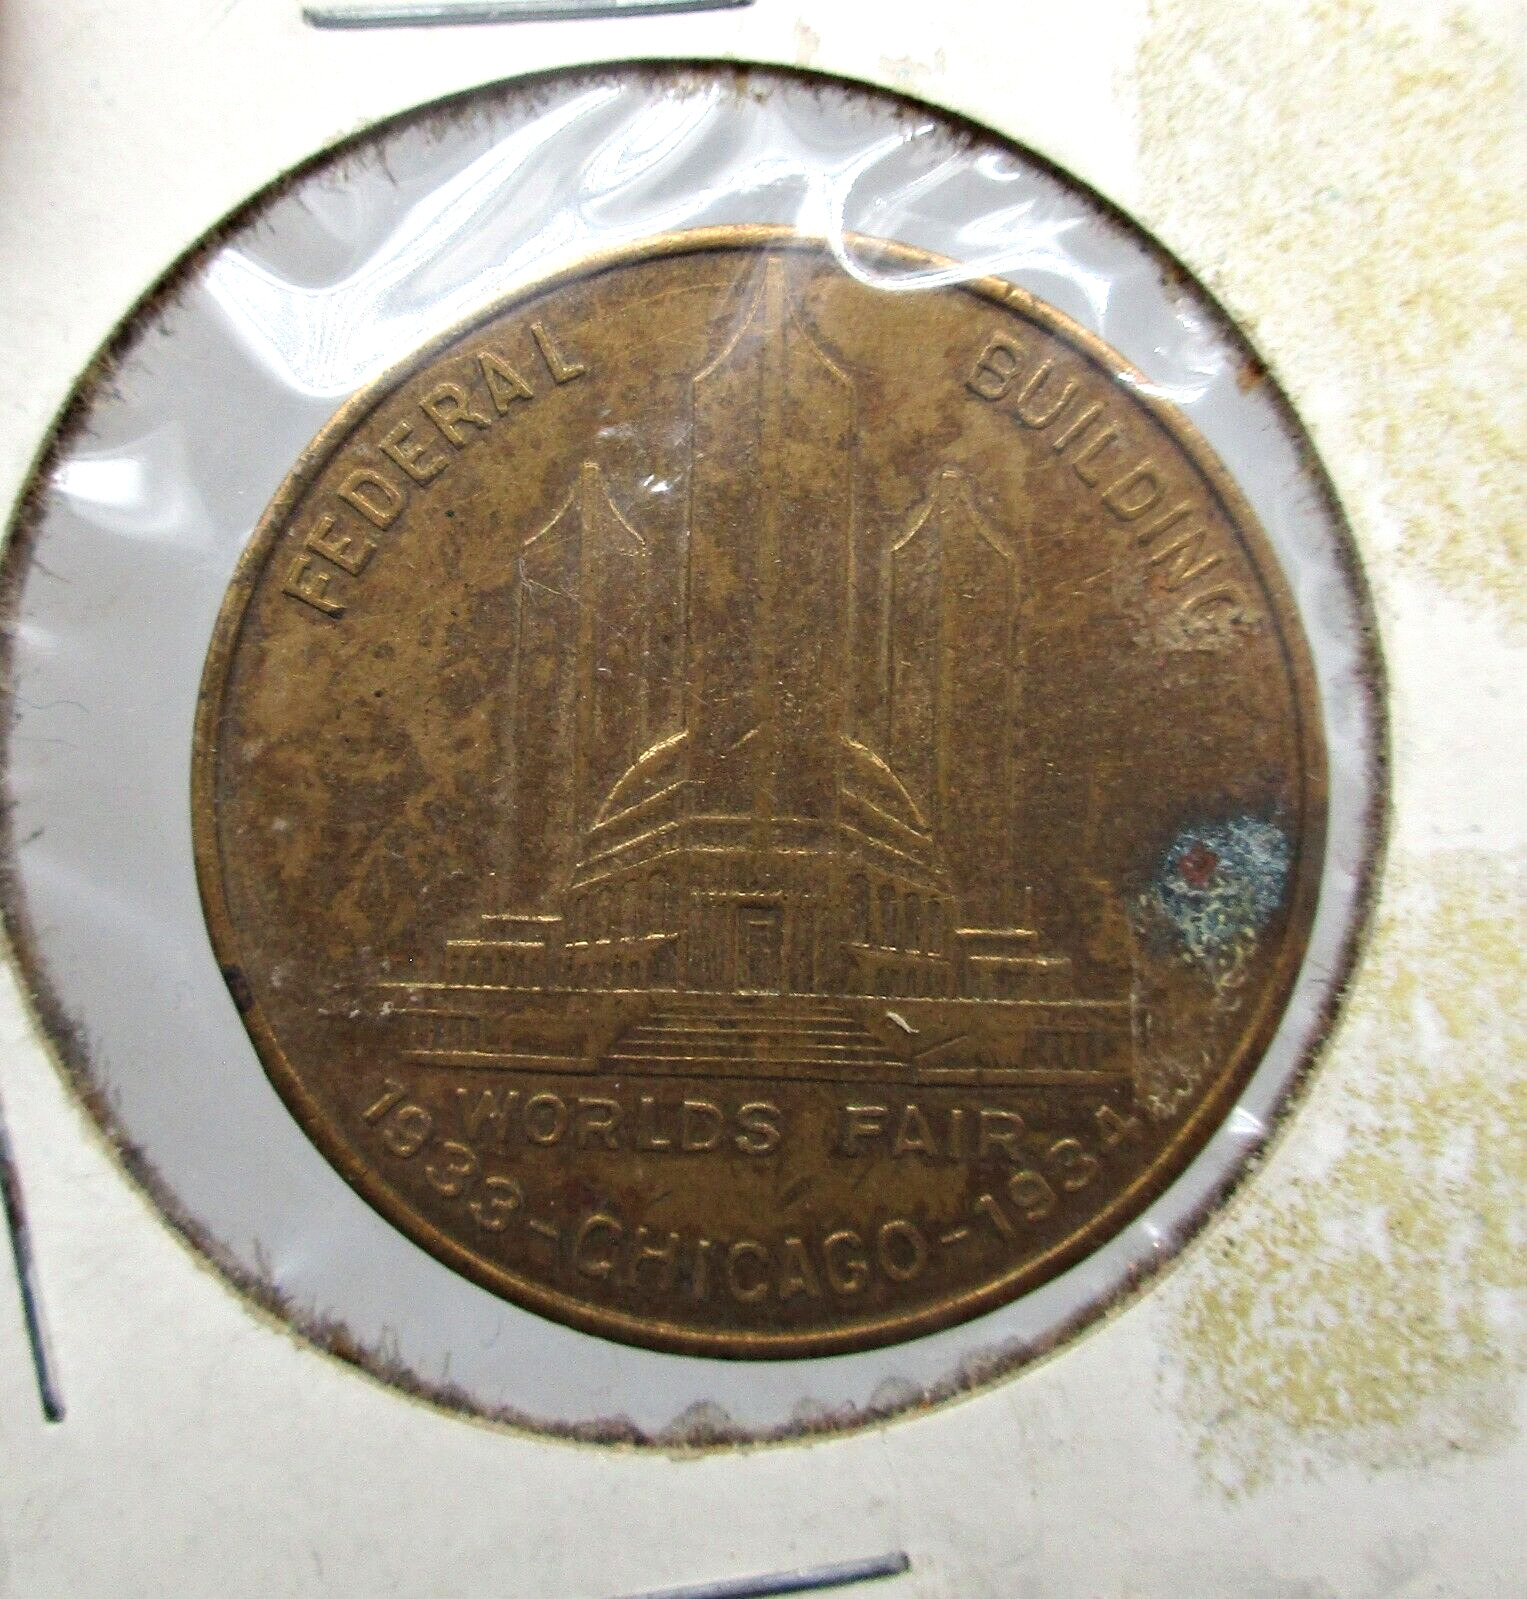 CHICAGO 1933-1934 WORLDS FAIR Medal FEDERAL BUILDING Good Luck Token